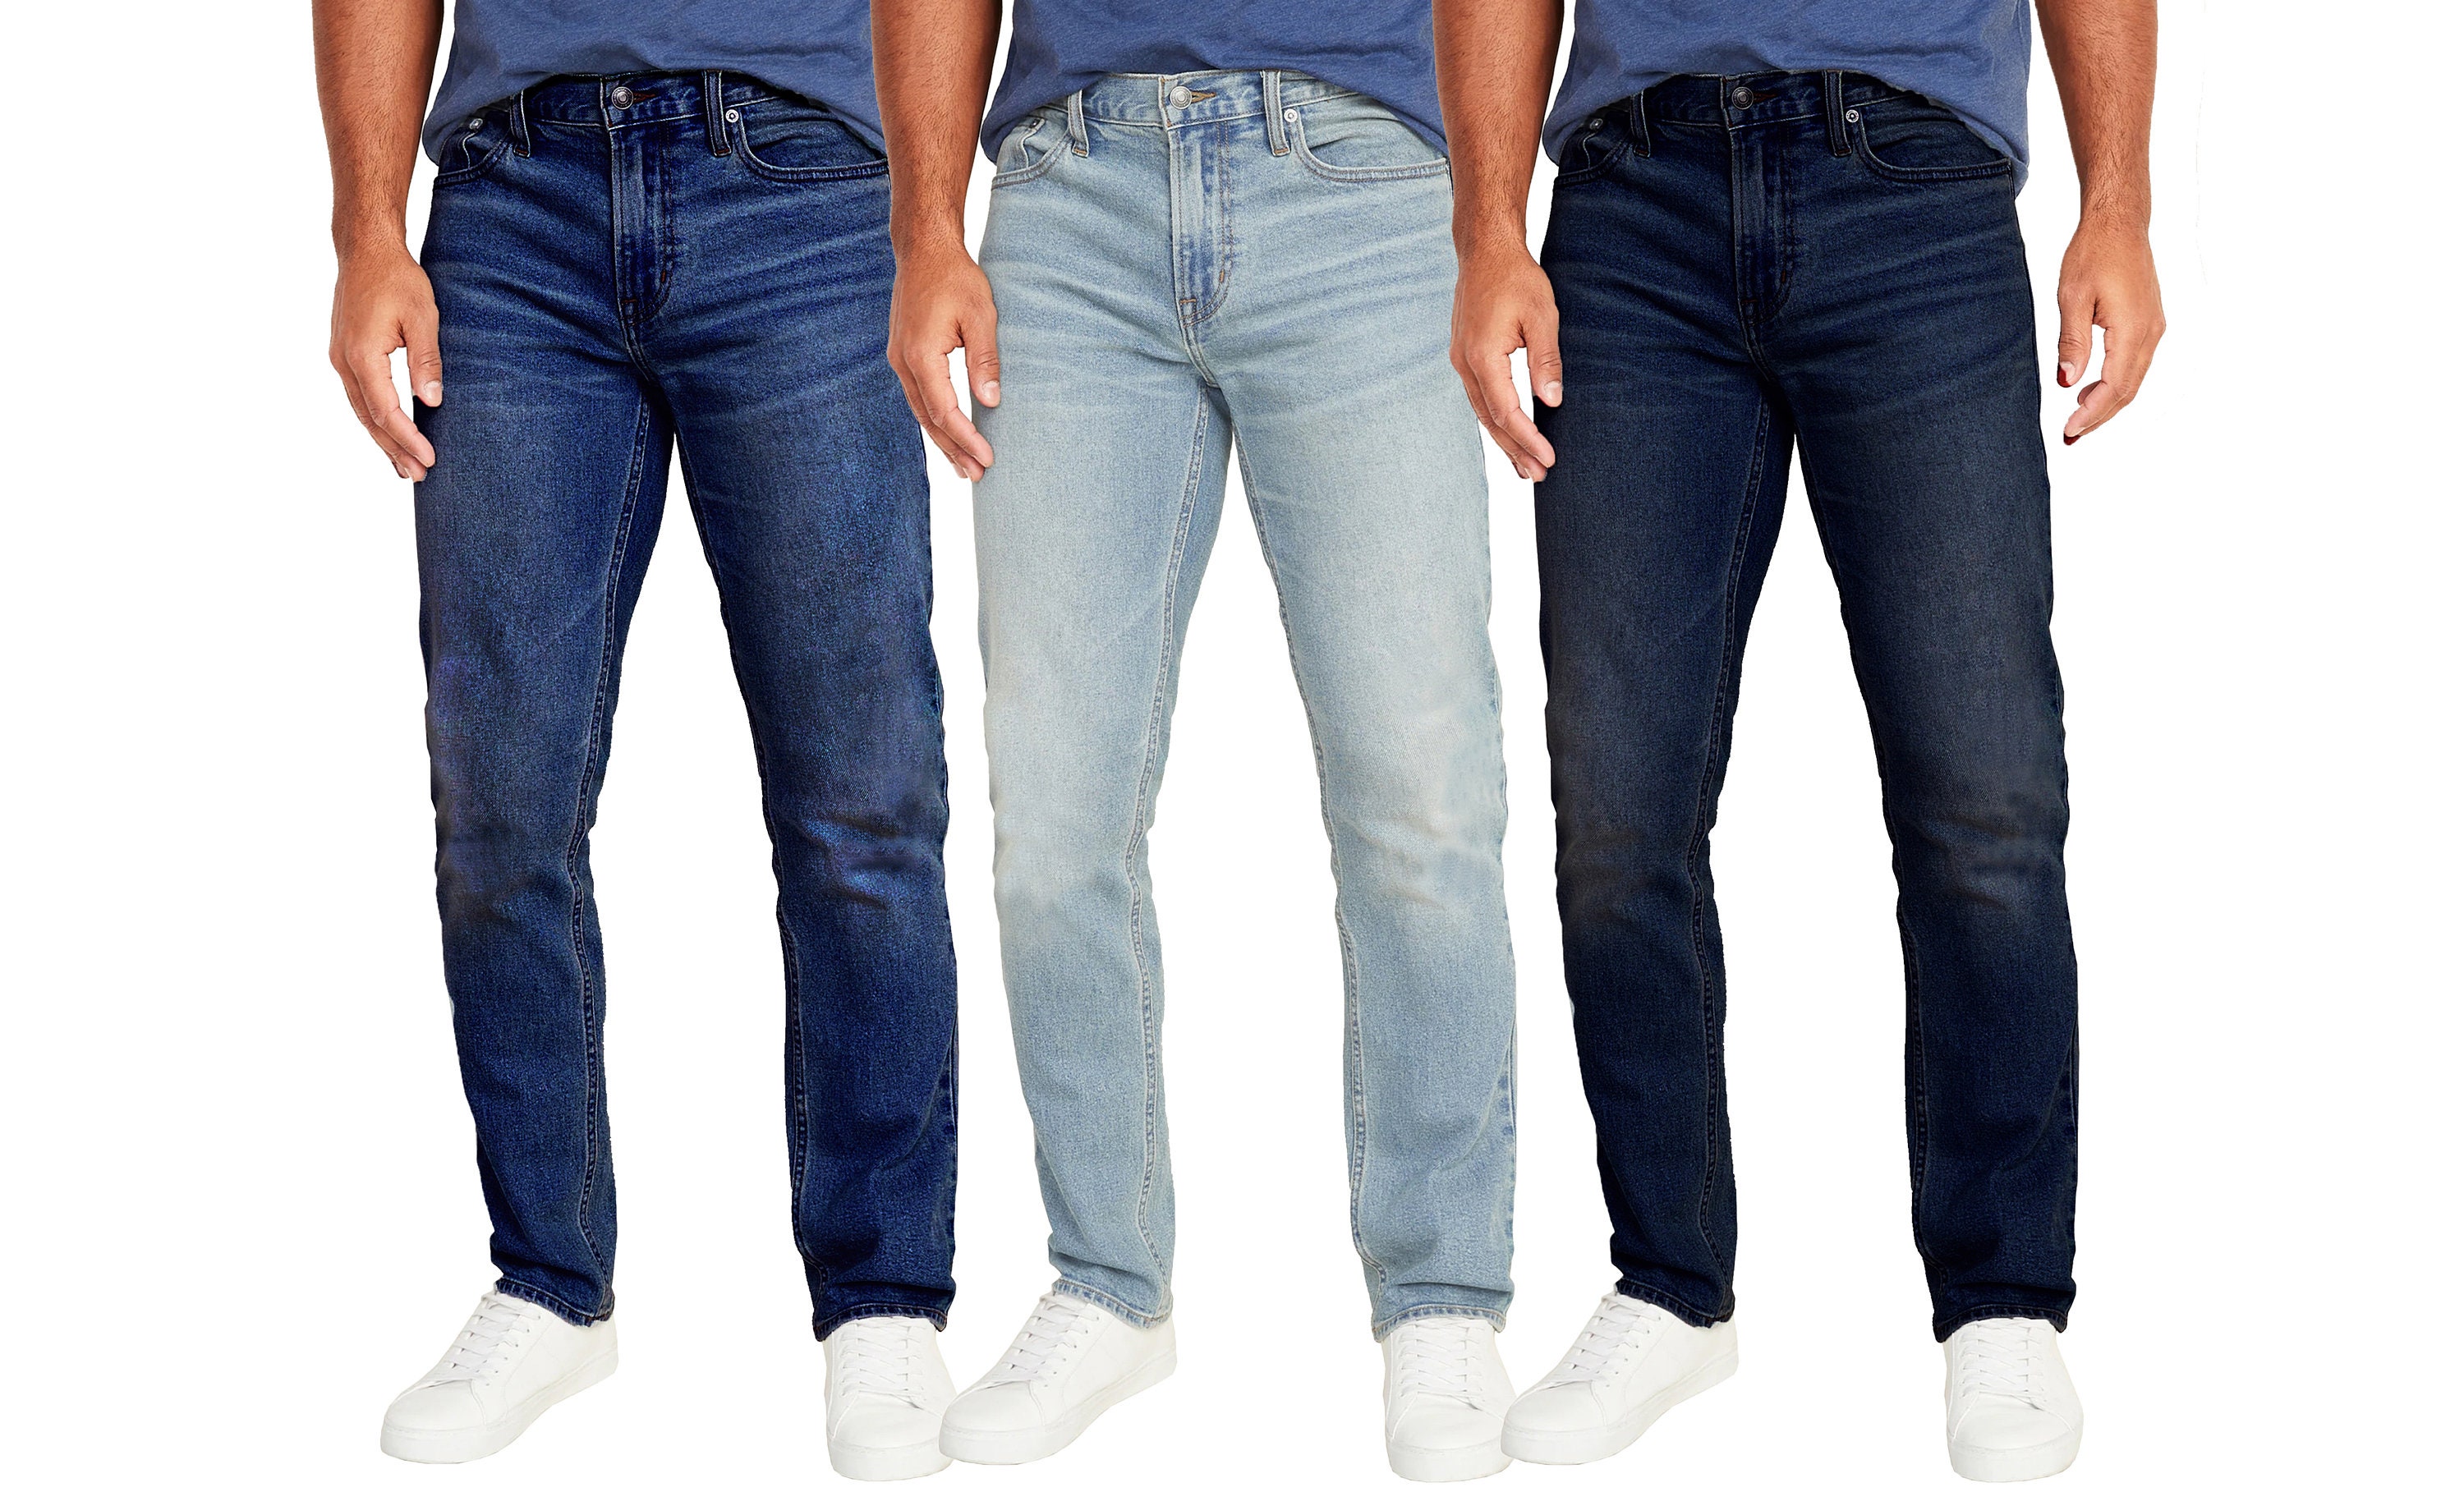 Printed Denim Pants - Men - Ready-to-Wear